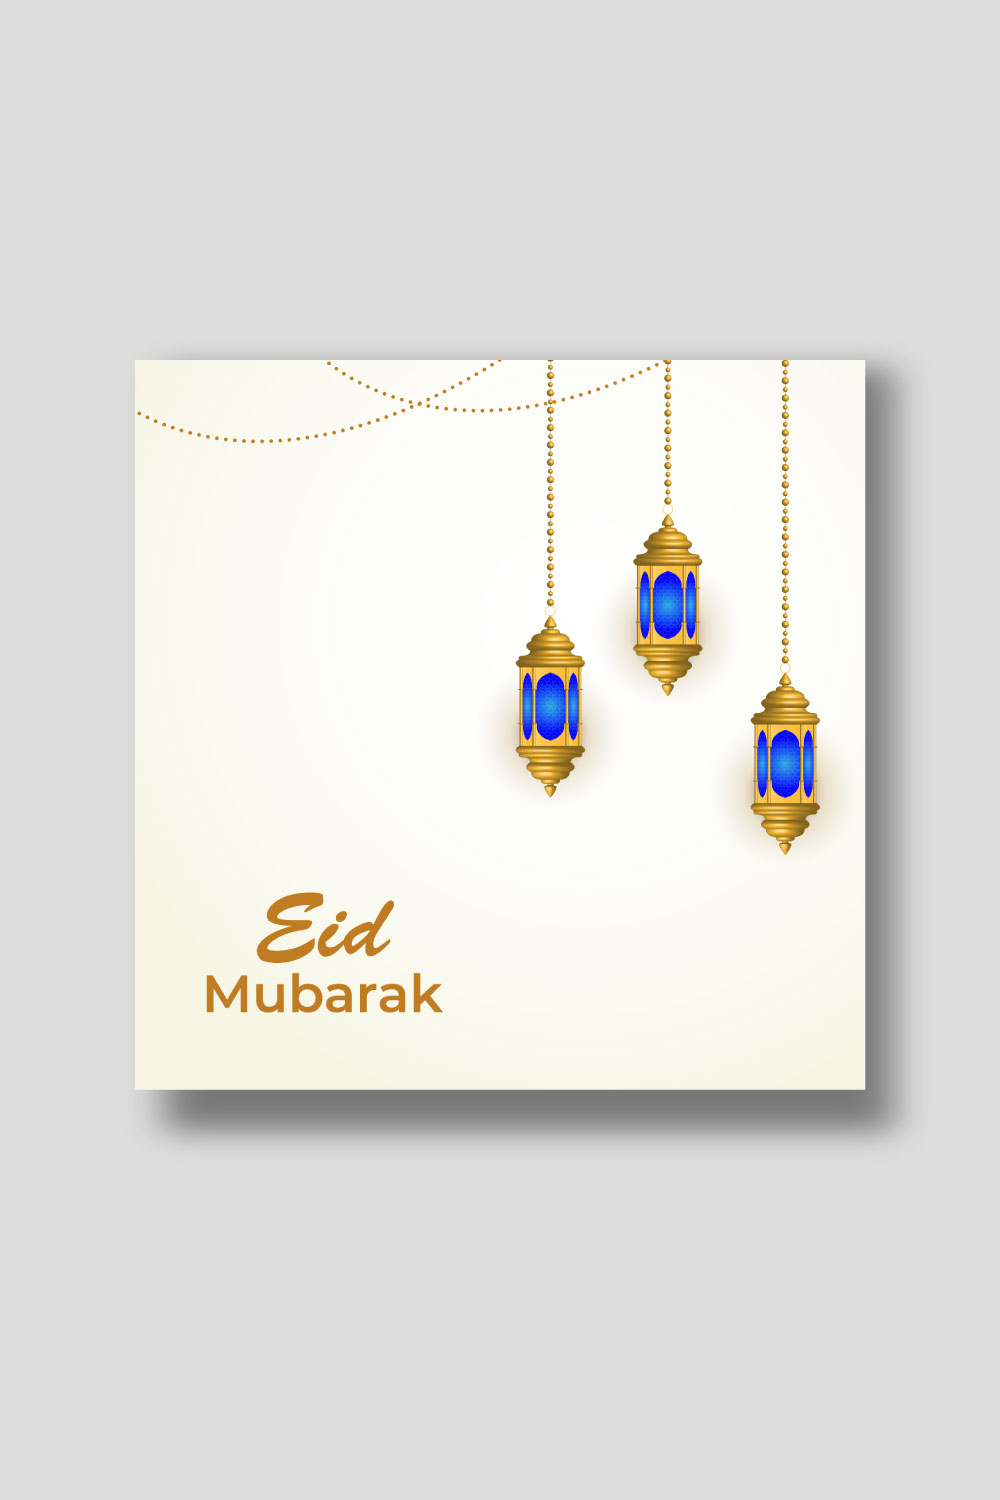 Eid Mubarak Social Media Design pinterest preview image.